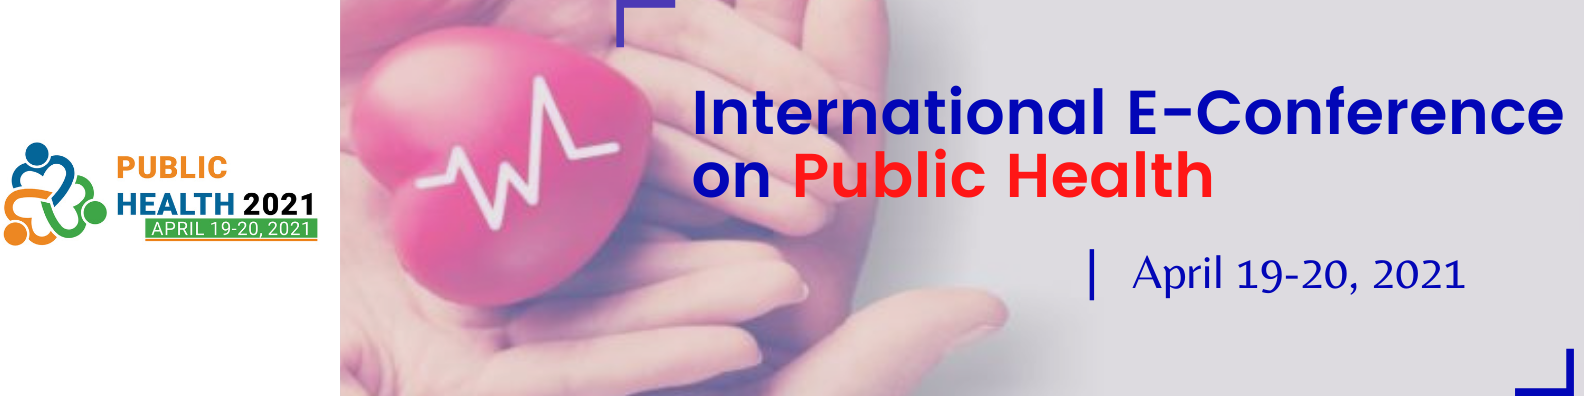 International E-Conference on Public Health